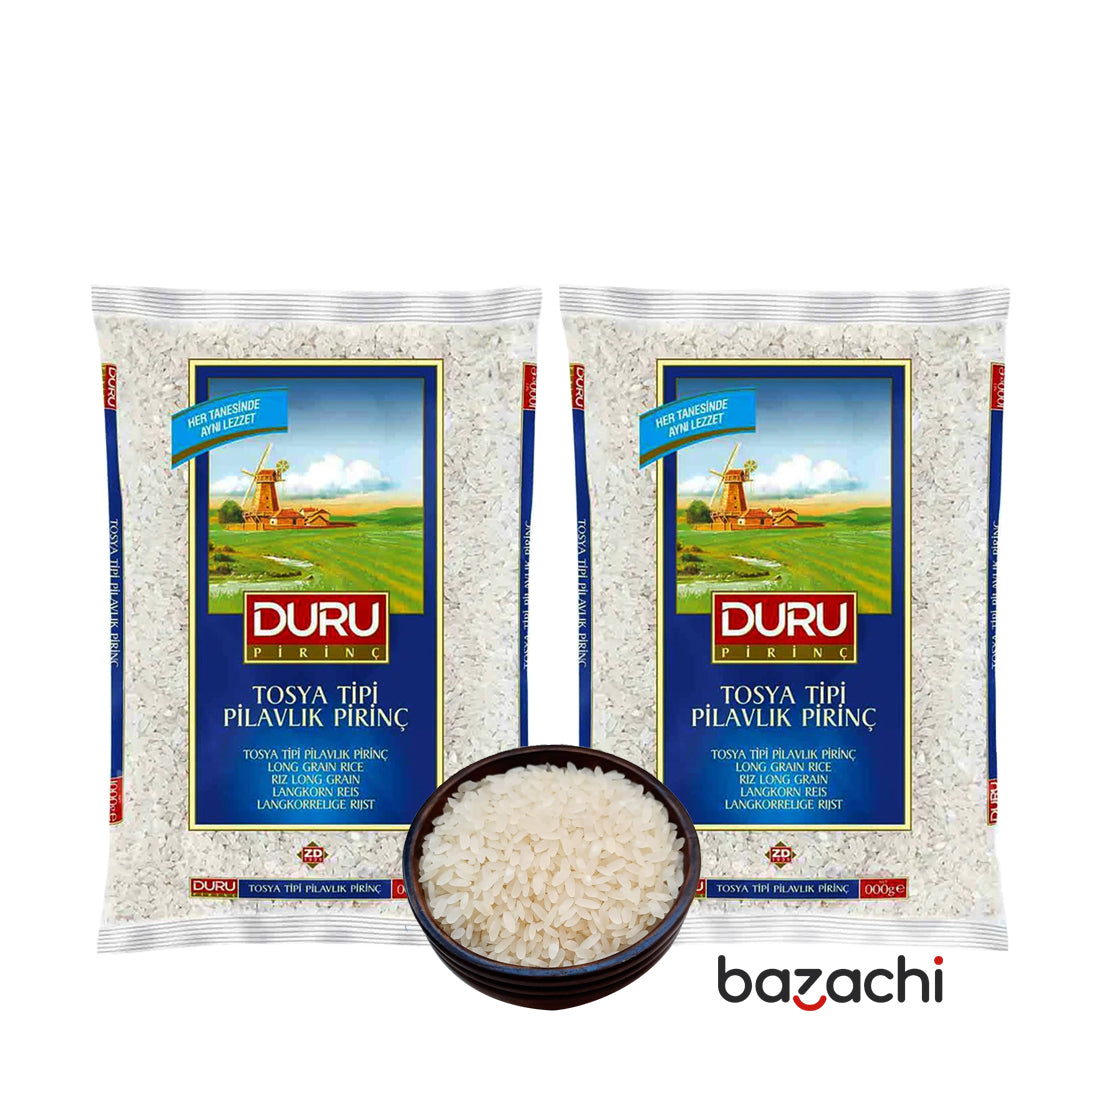 Duru Rice Tosya Tipi Pilavlik Pirinc 5kg